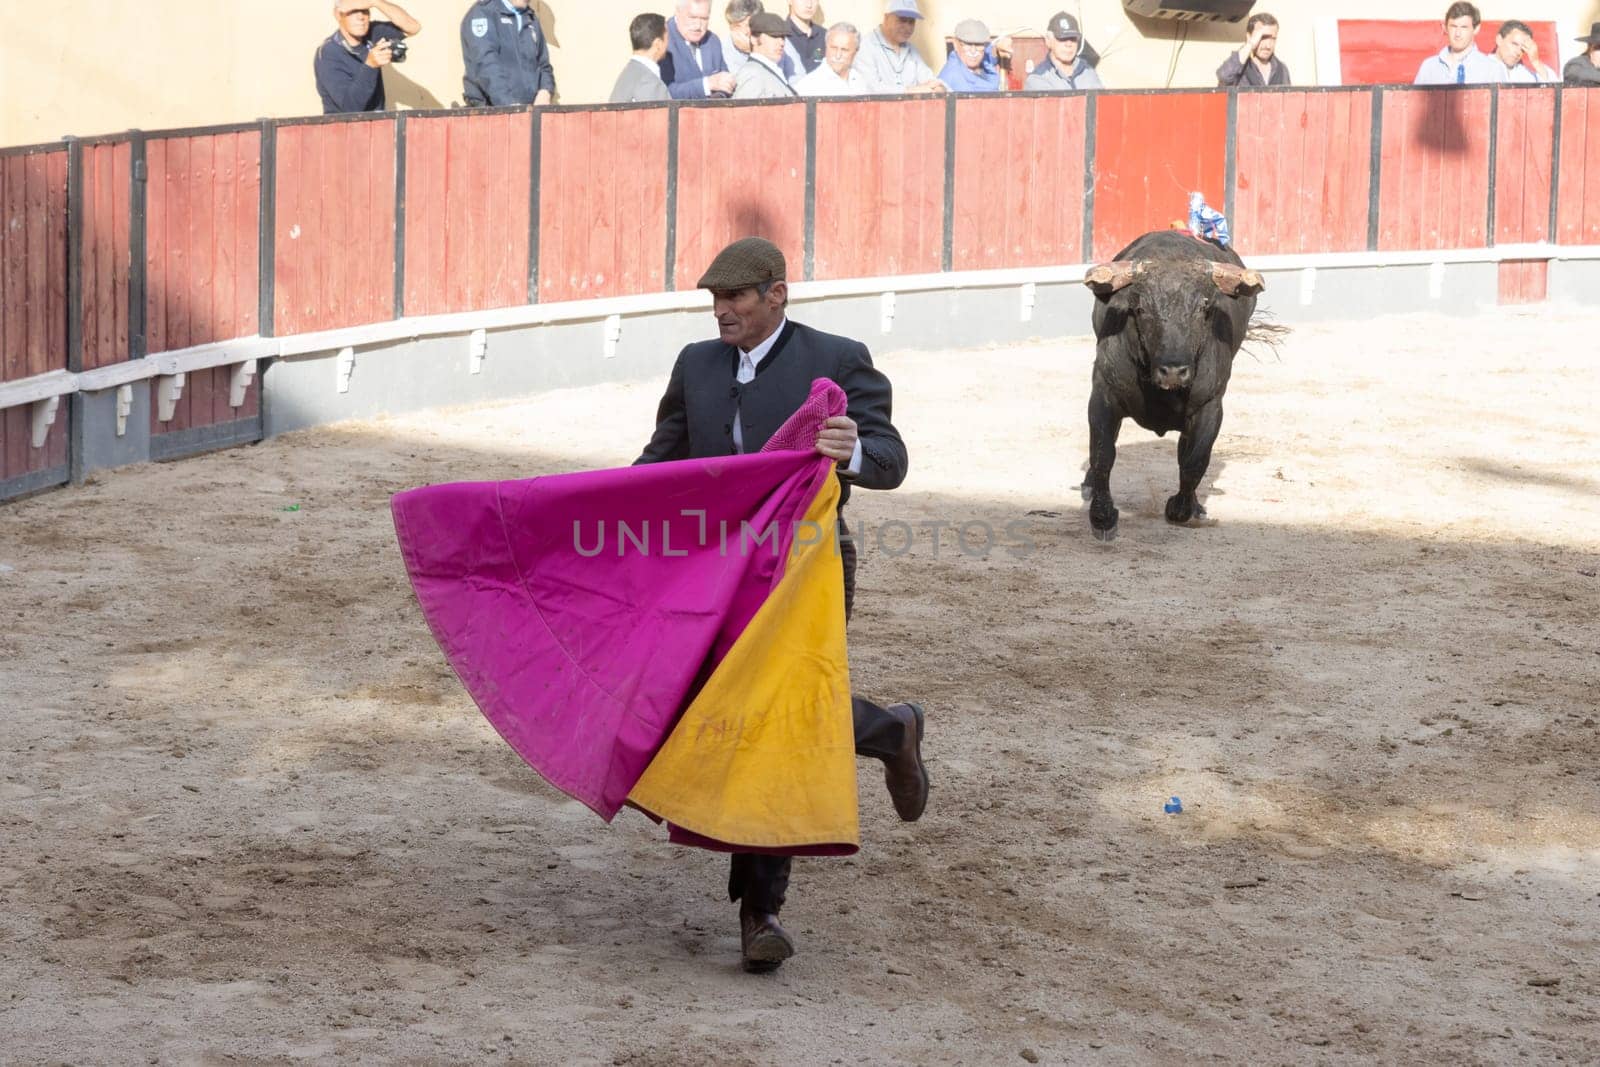 March 26, 2023 Lisbon, Portugal: Tourada - bullfighter run away from the bull holding a bright rag. Mid shot